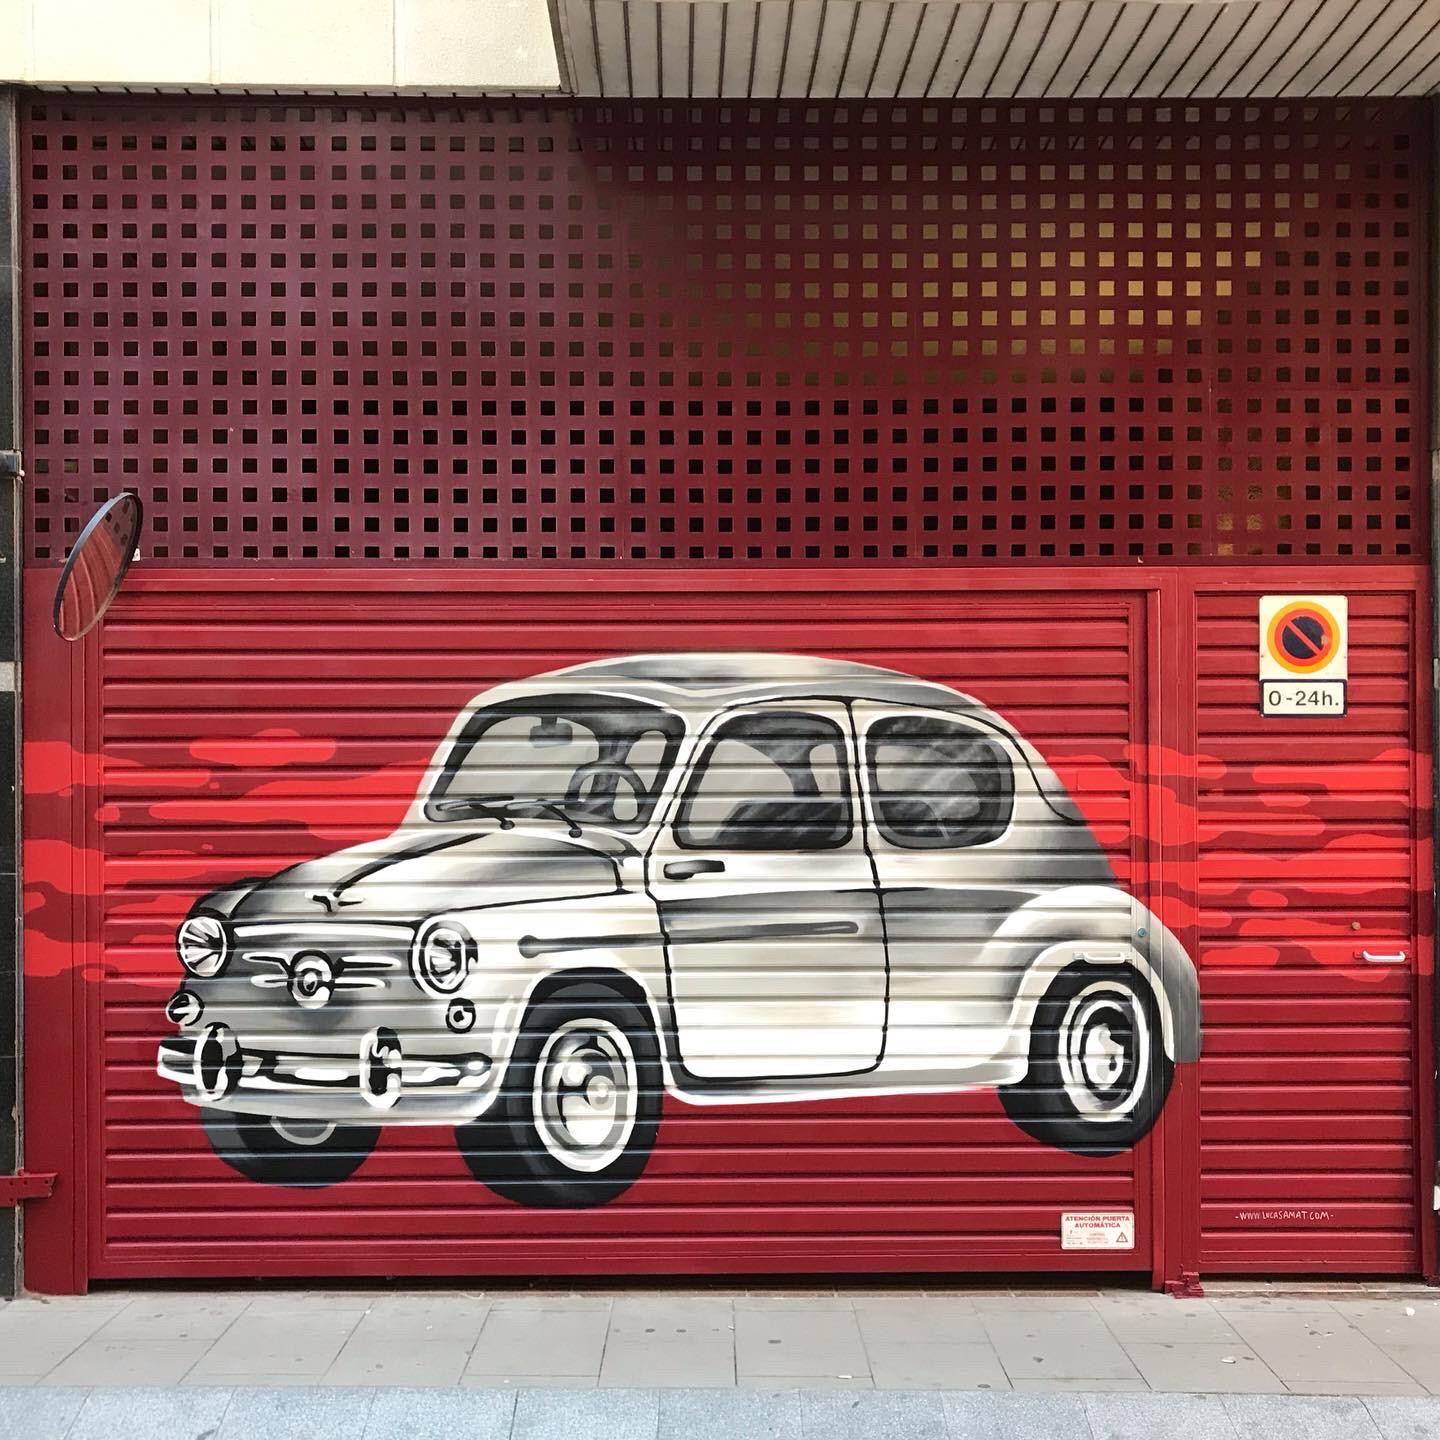 Graffitis Profesional Artístico Puerta de Parking Barcelona